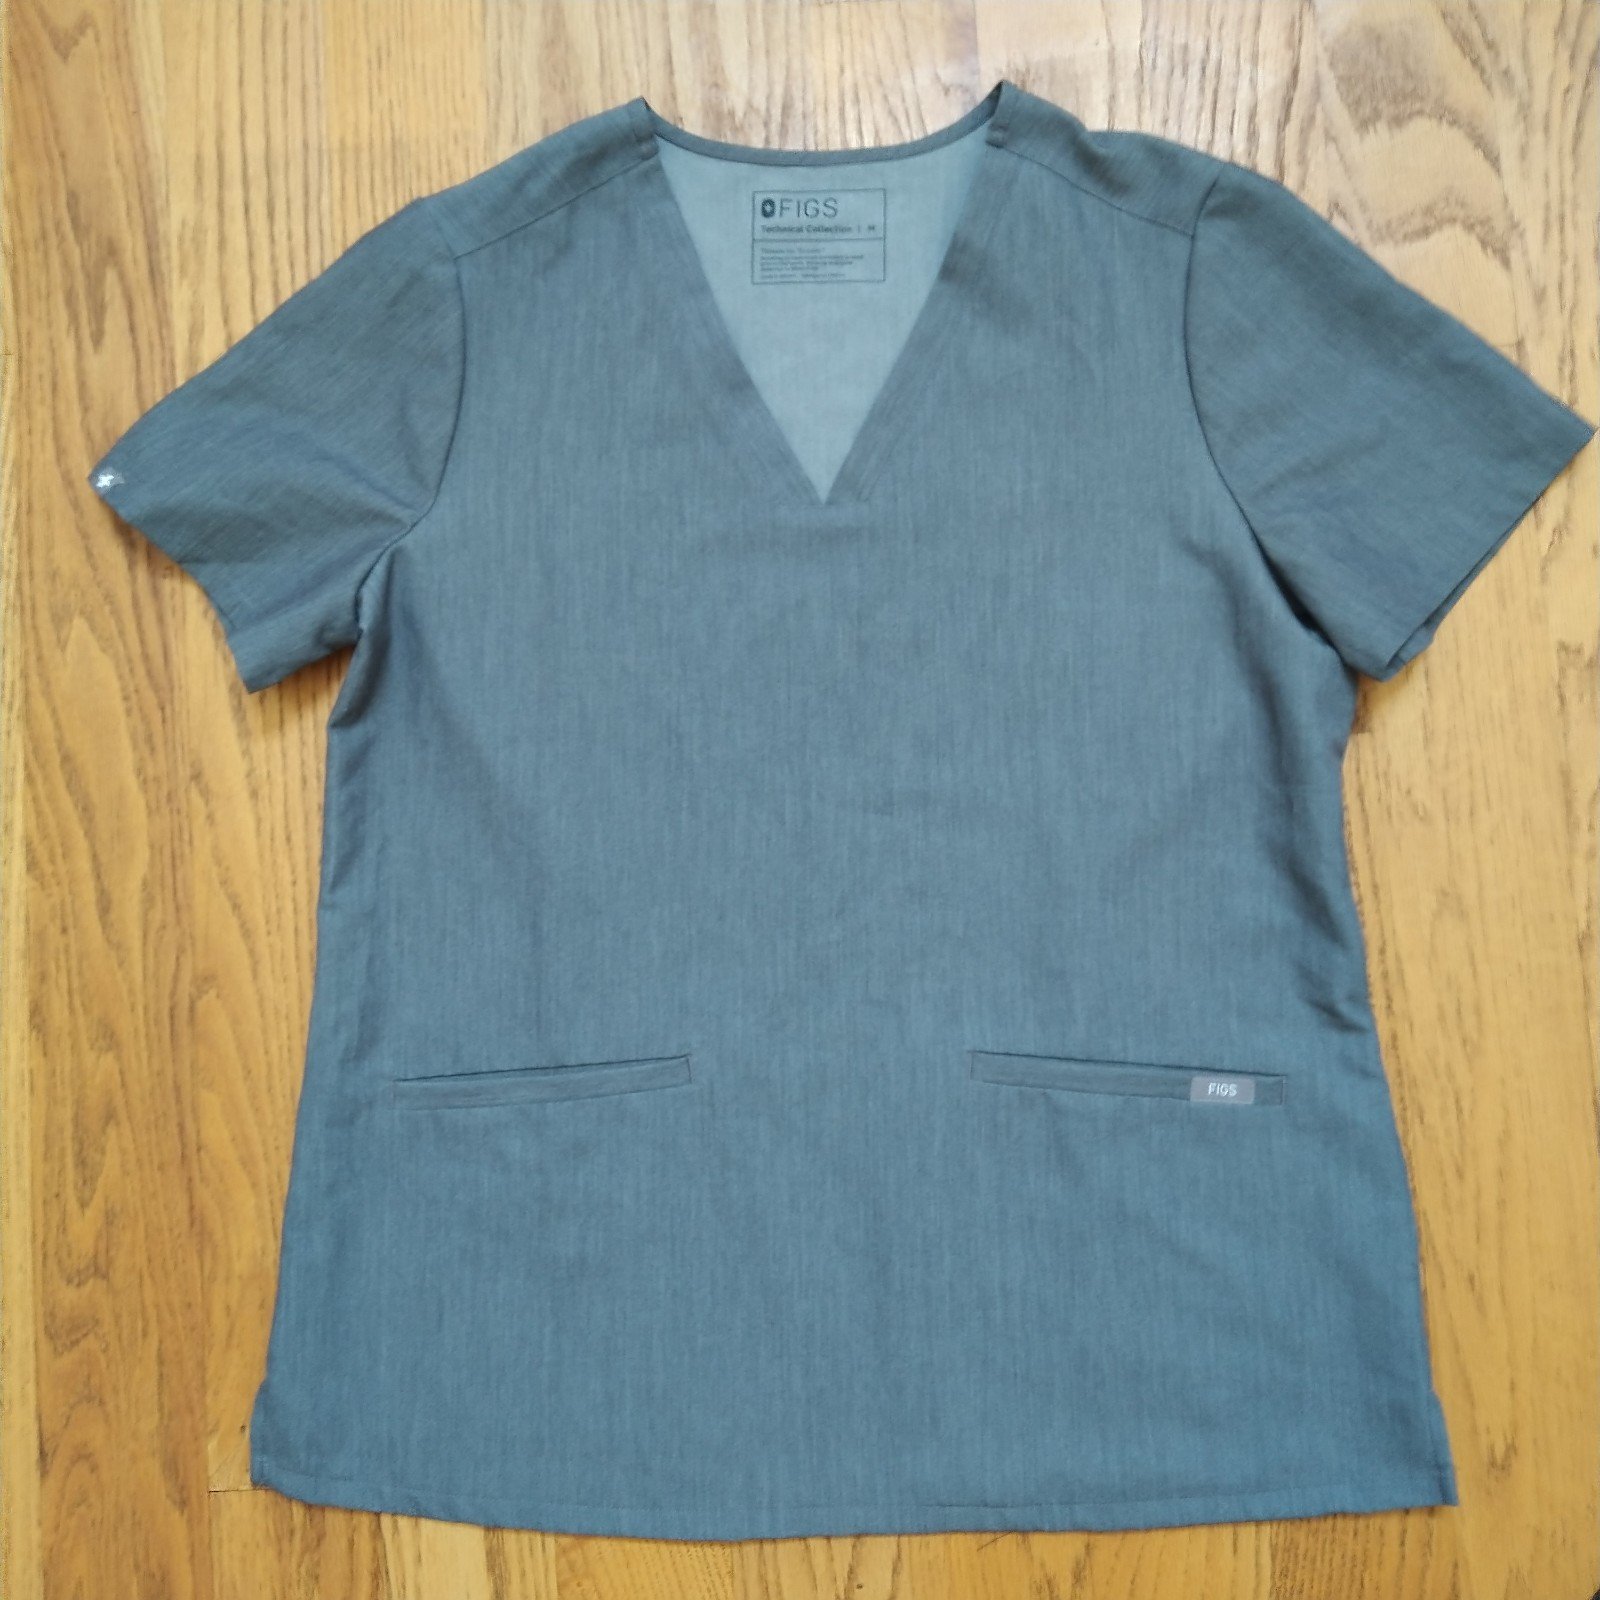 FIGS Technical Collection Women’s Gray V-Neck Scrub Top Shirt Size M FS08BTVwj